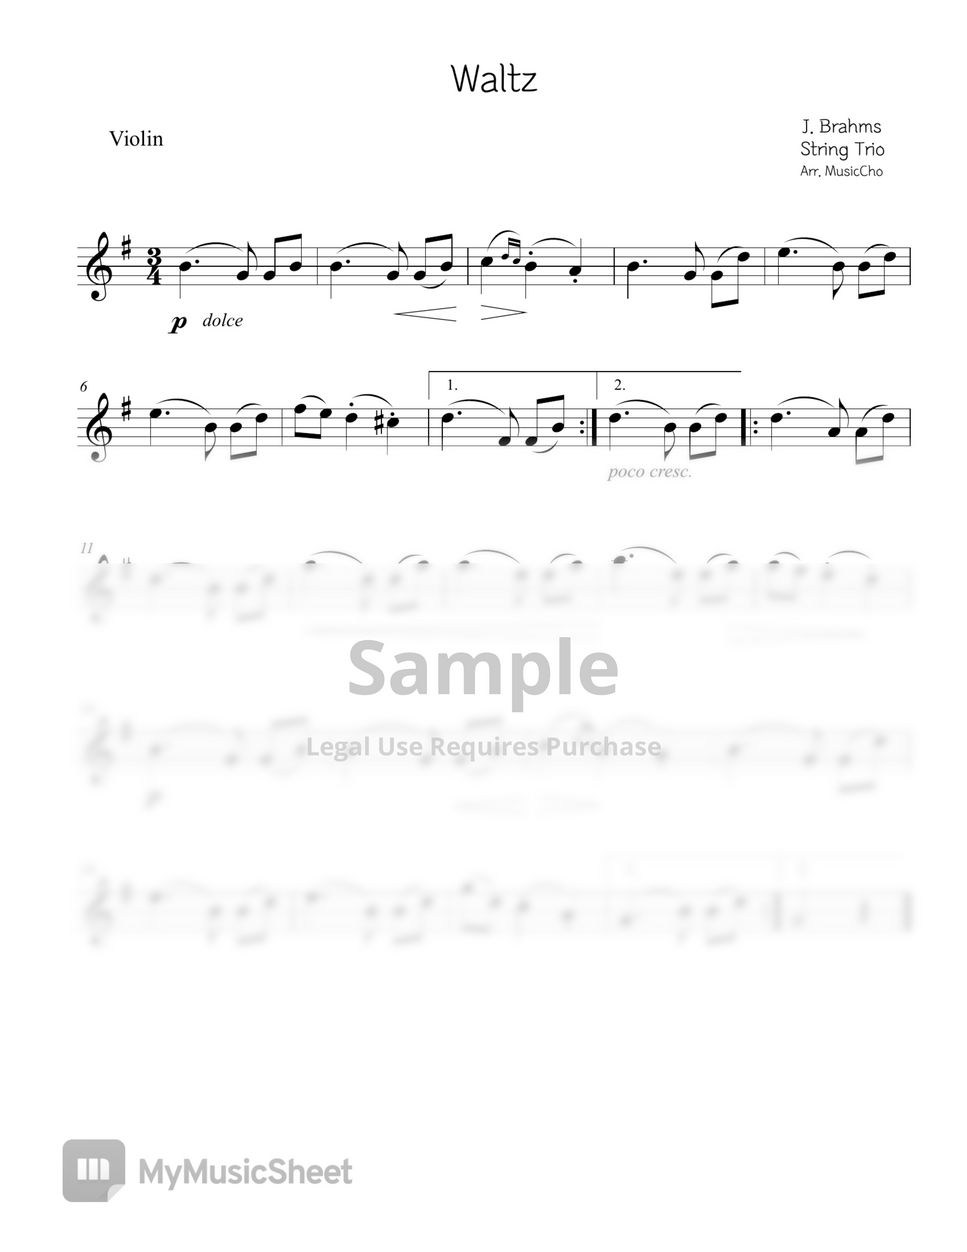 J. Brahms - Waltz(Wedding Music) (String Trio) by MusicCho